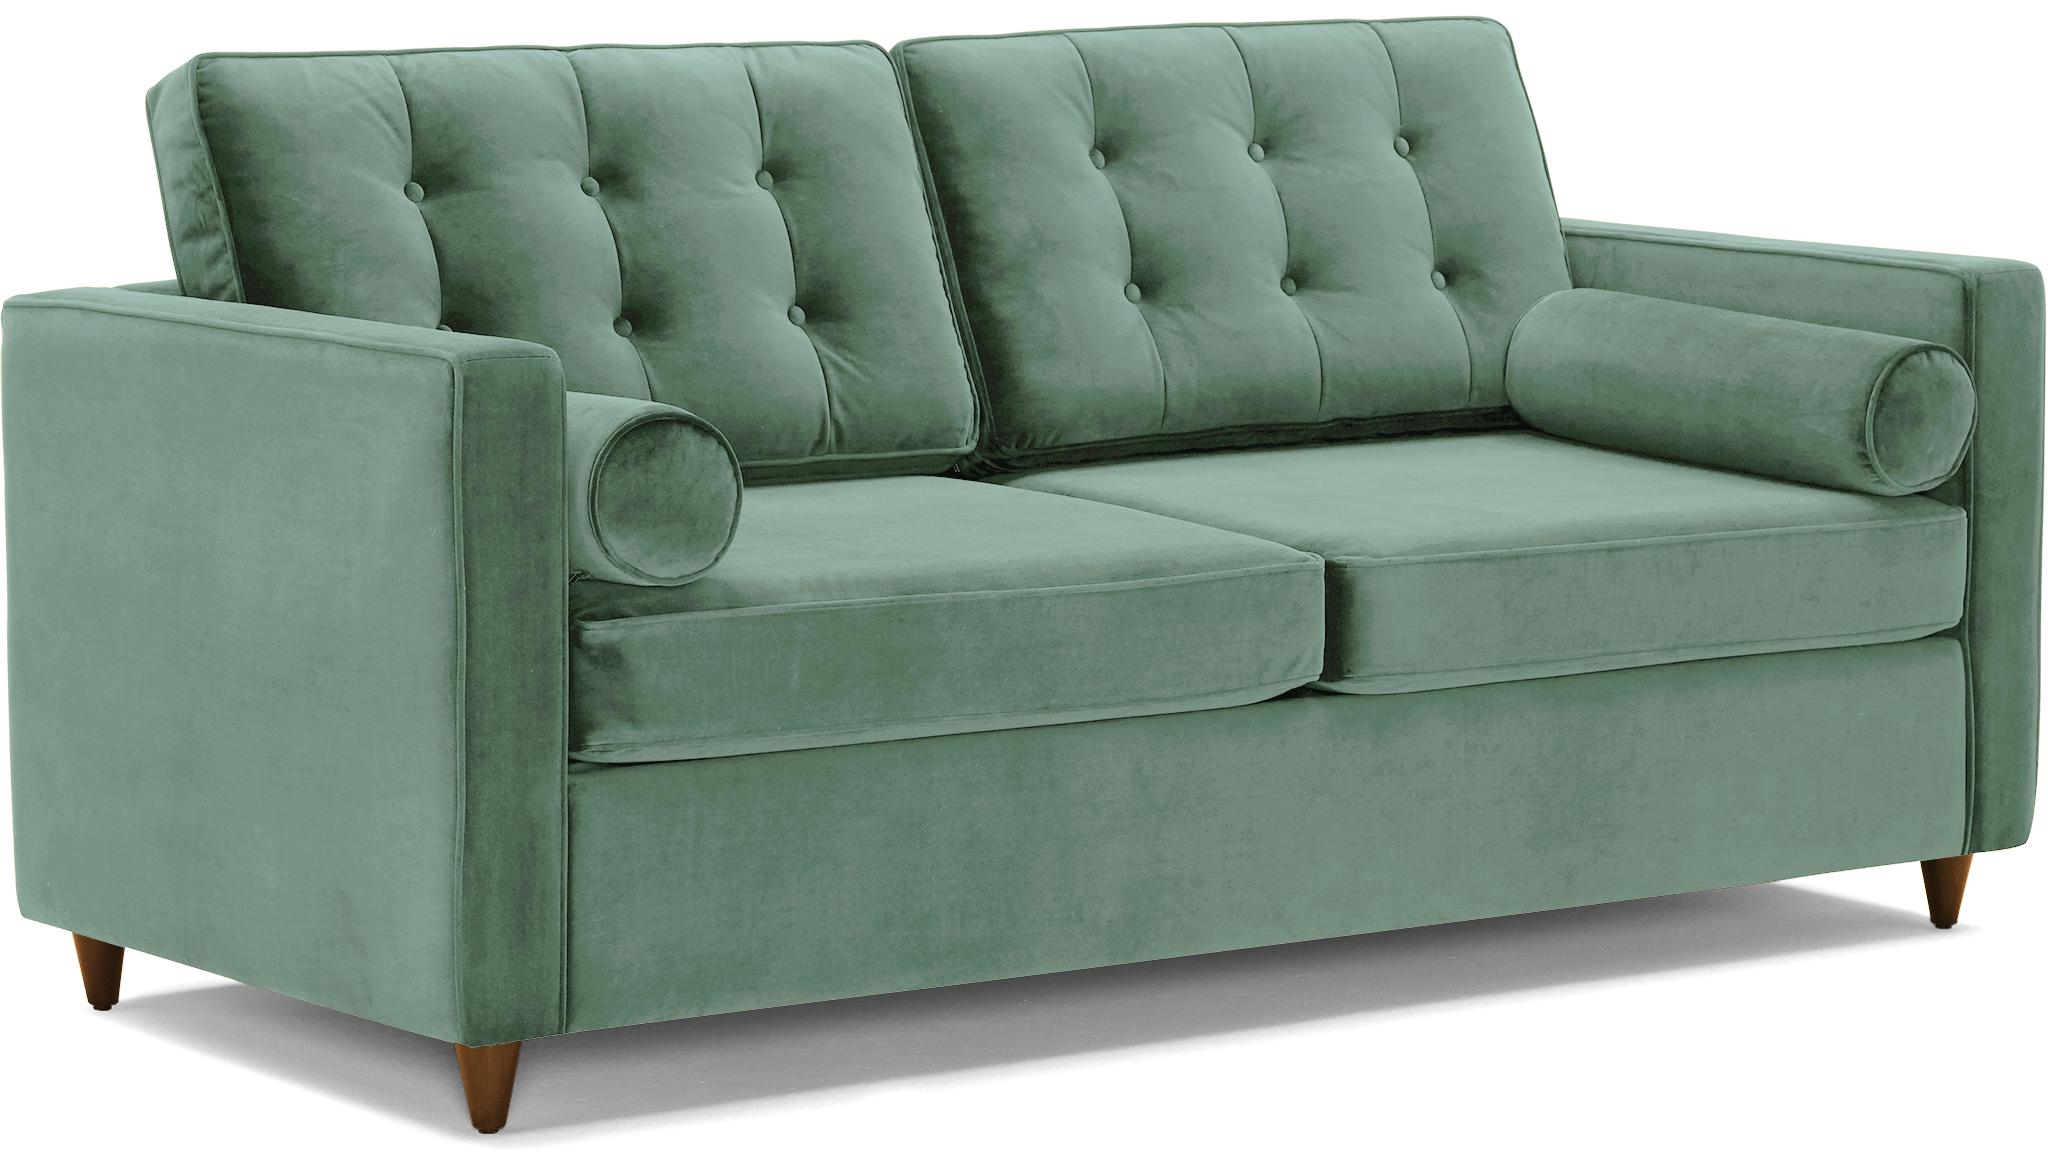 Green Braxton Mid Century Modern Sleeper Sofa - Essence Aqua - Mocha - Image 1